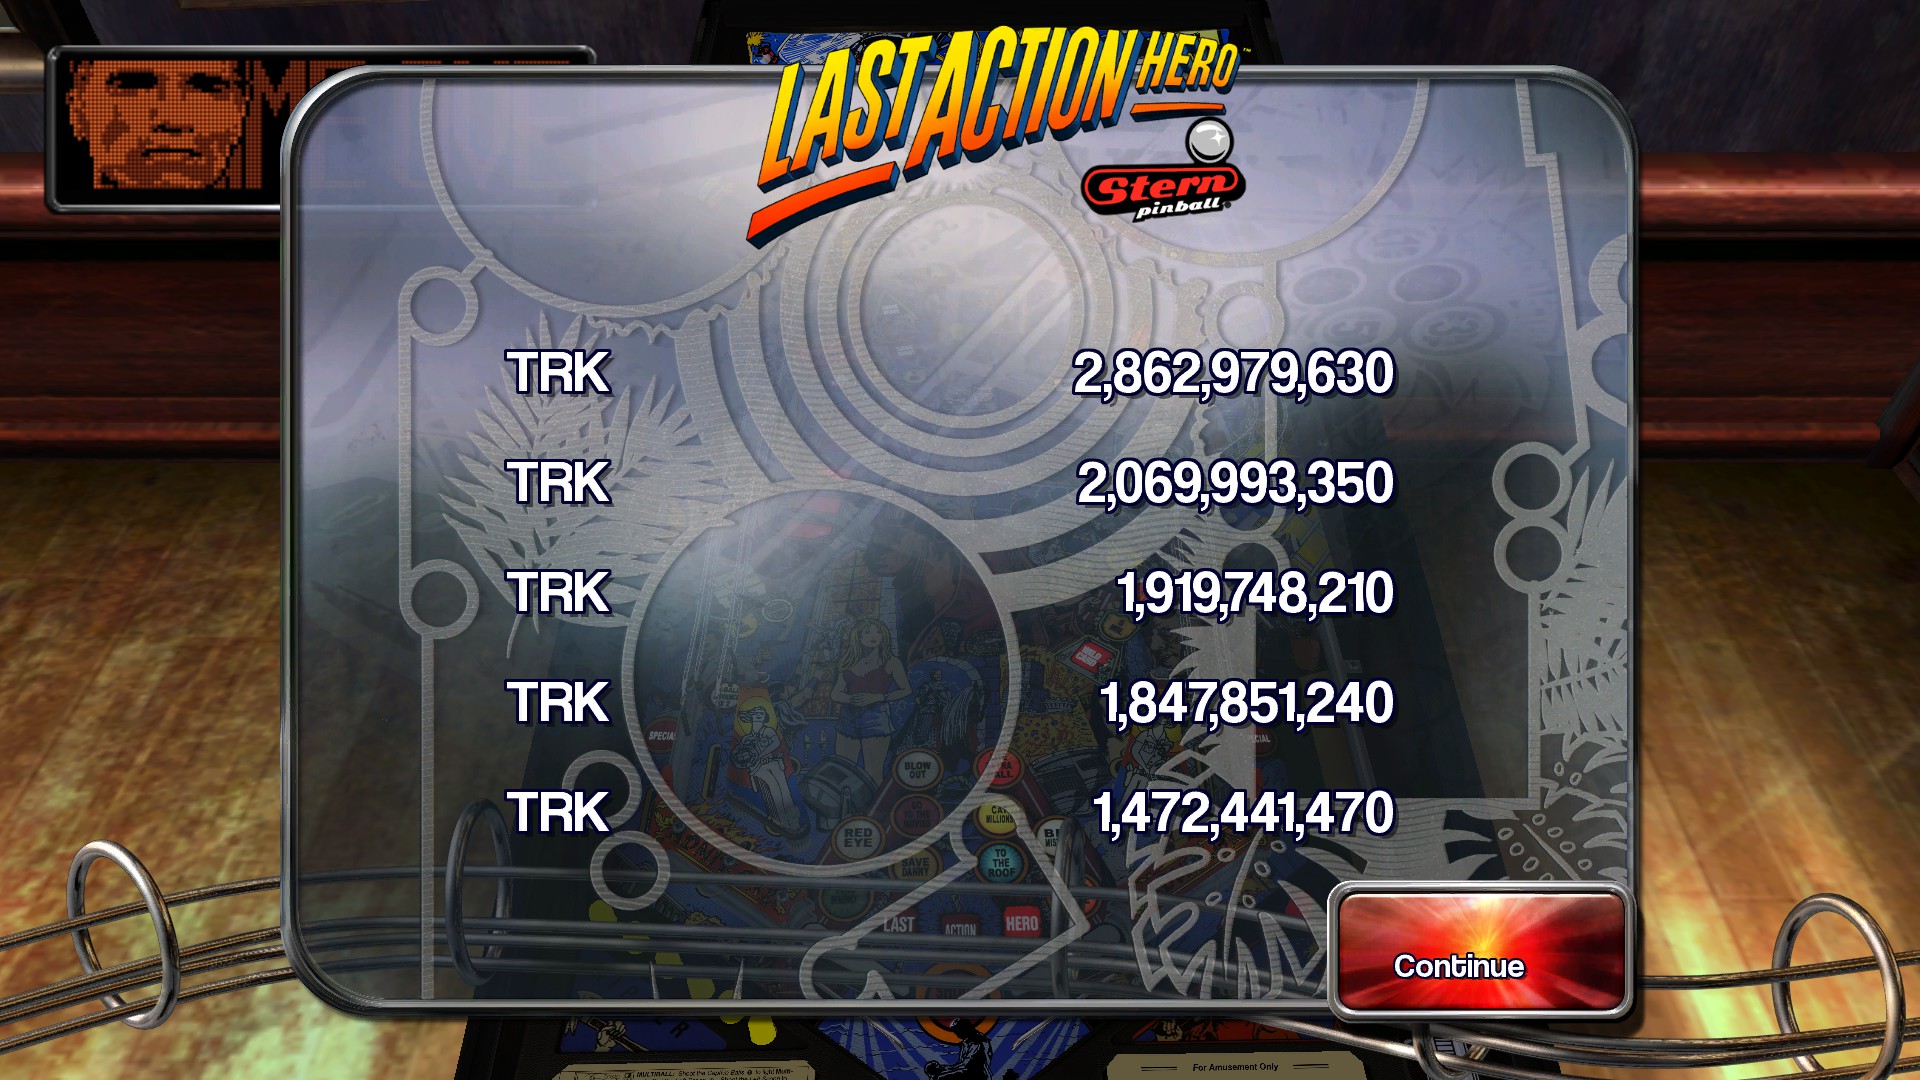 TheTrickster: Pinball Arcade: Last Action Hero (PC) 2,862,979,630 points on 2016-05-06 07:43:29